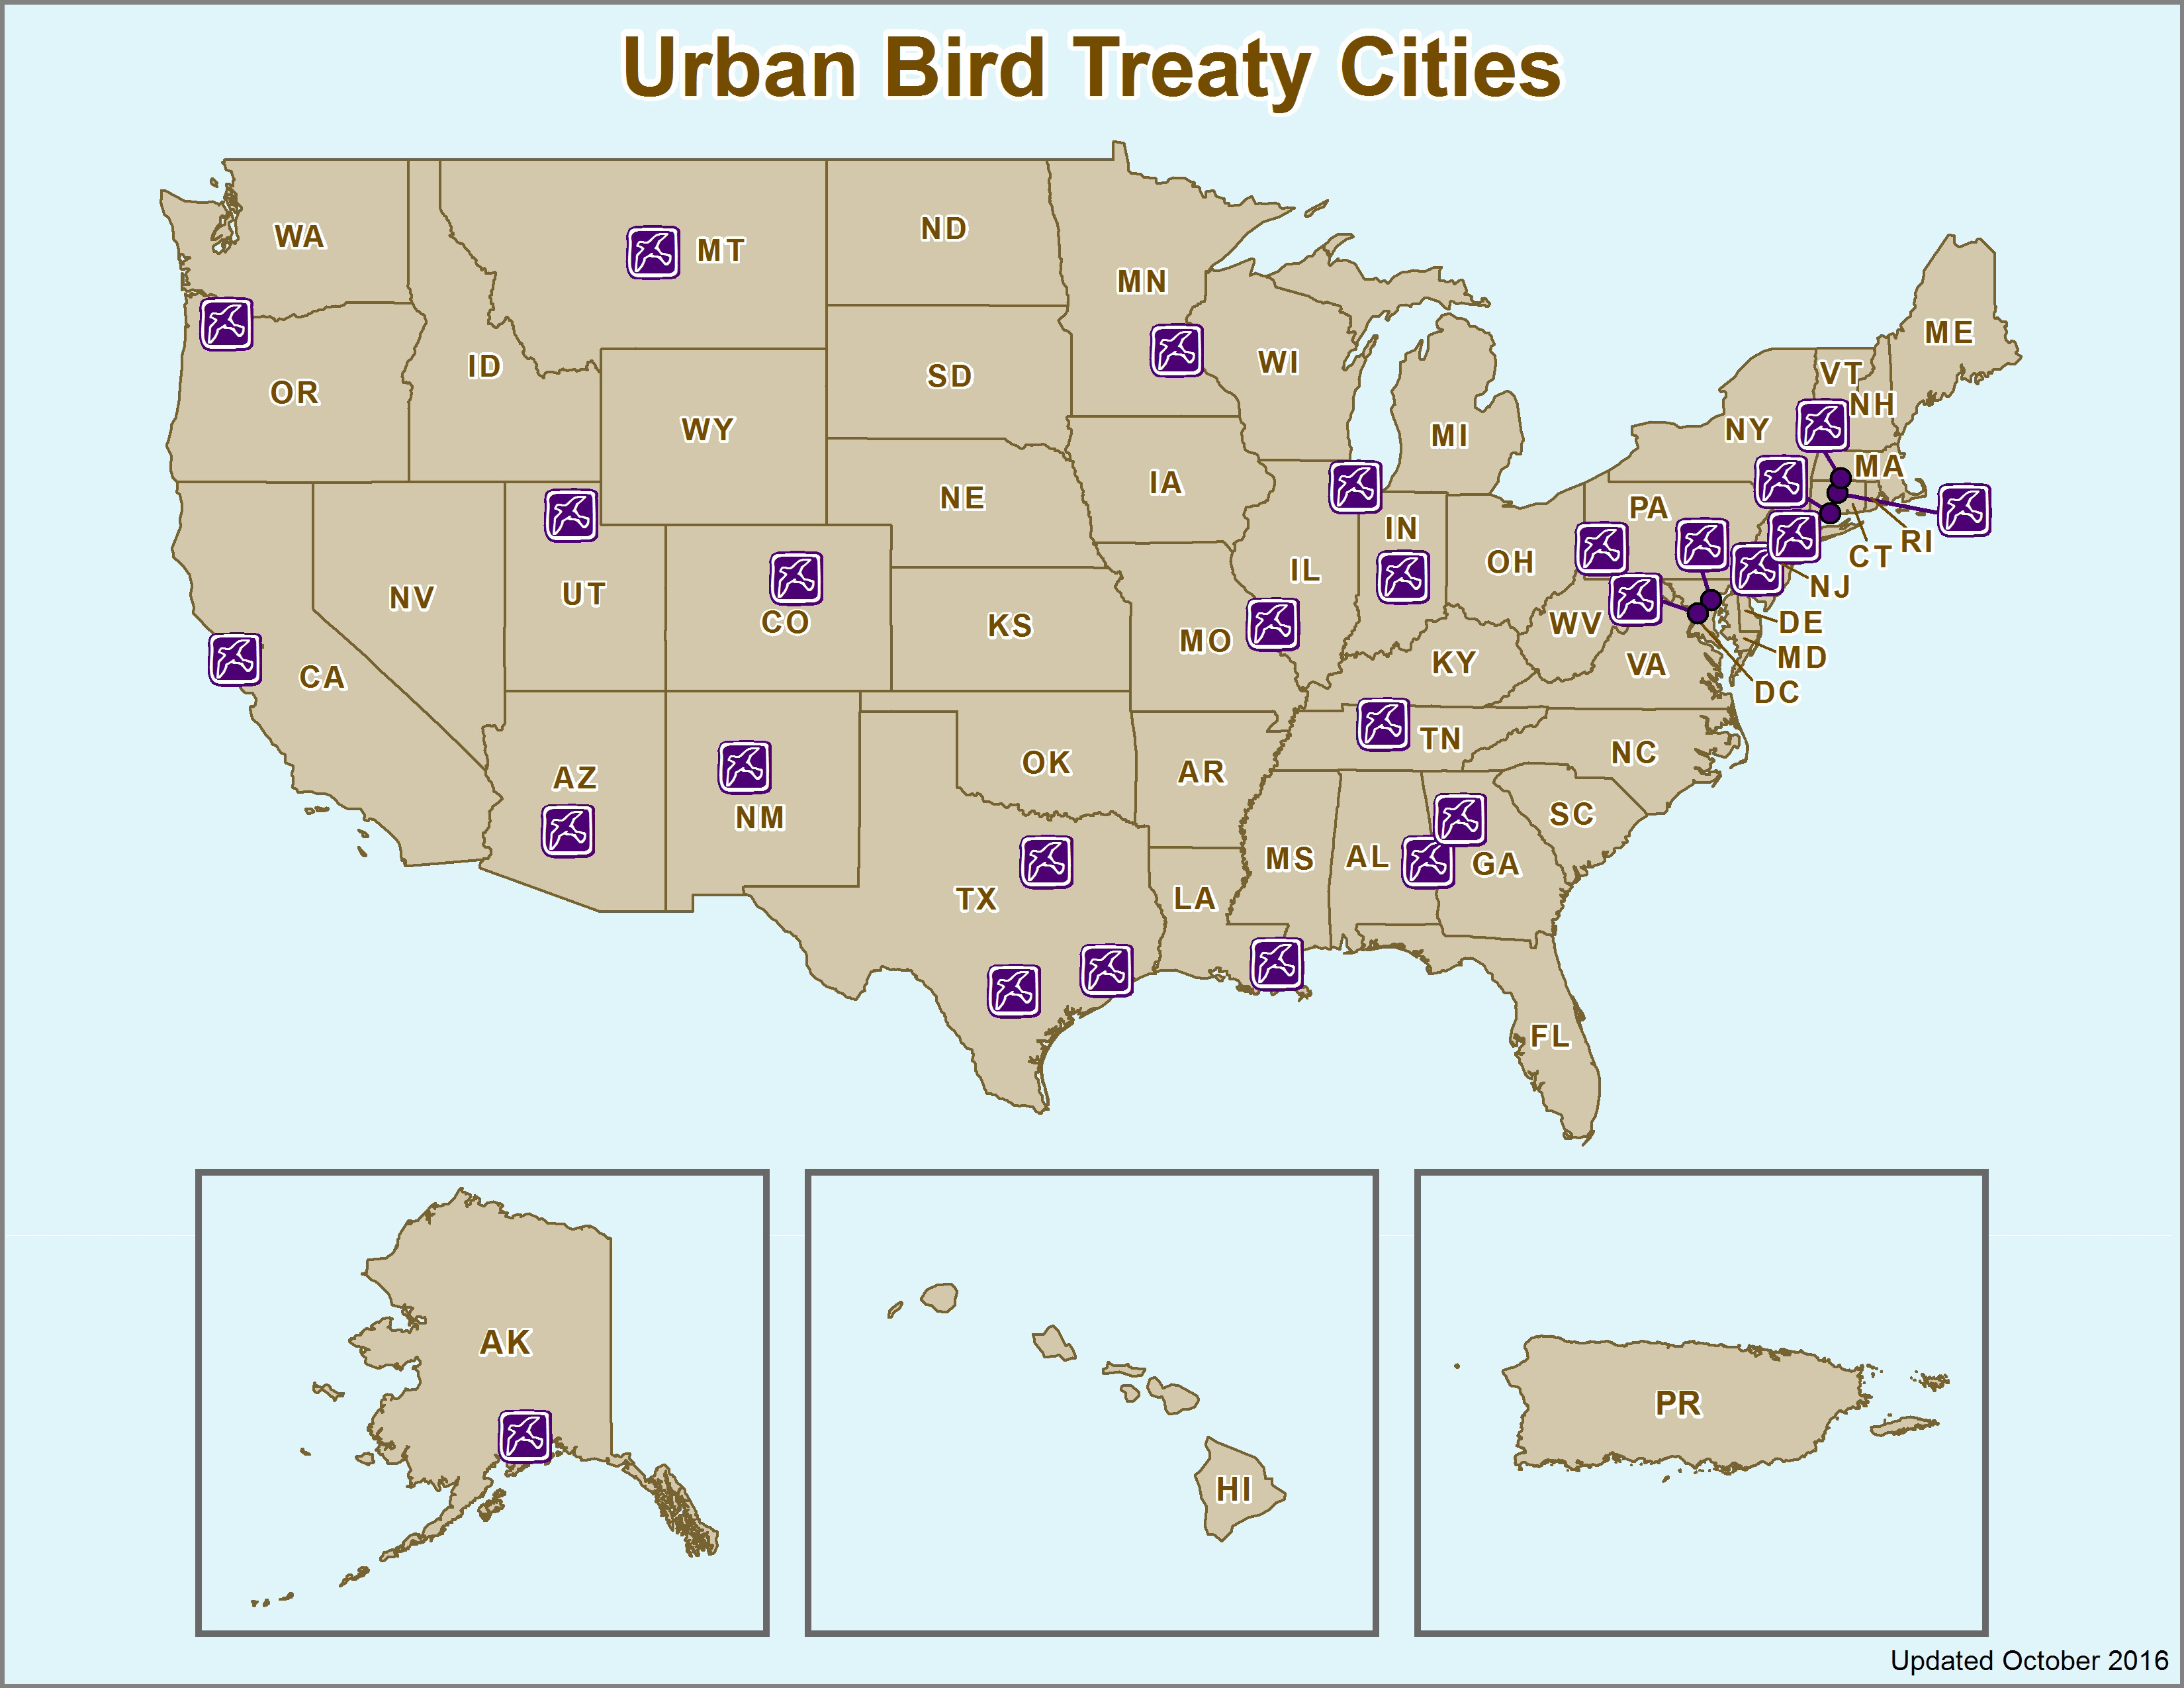 Urban bird treaty city map